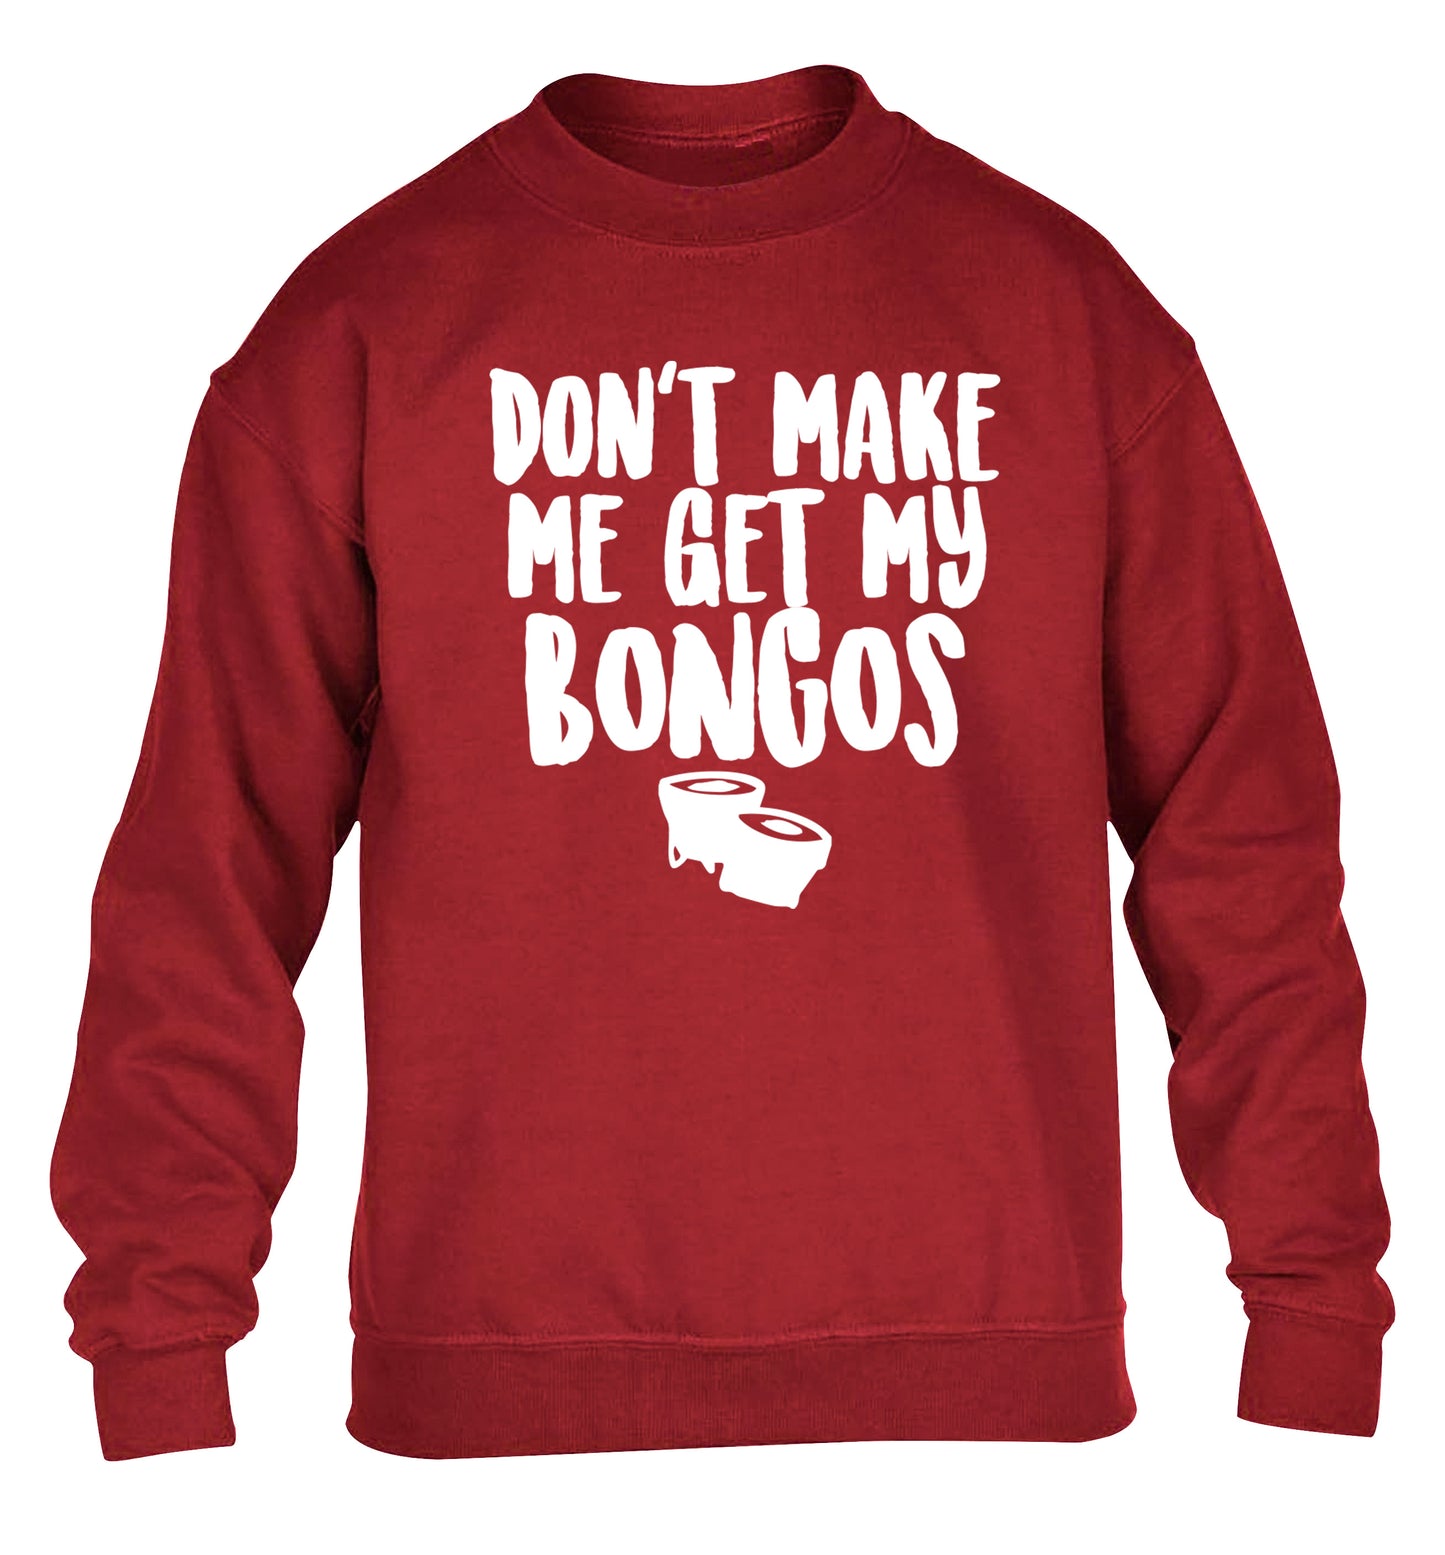 Don't make me get my bongos children's grey sweater 12-14 Years